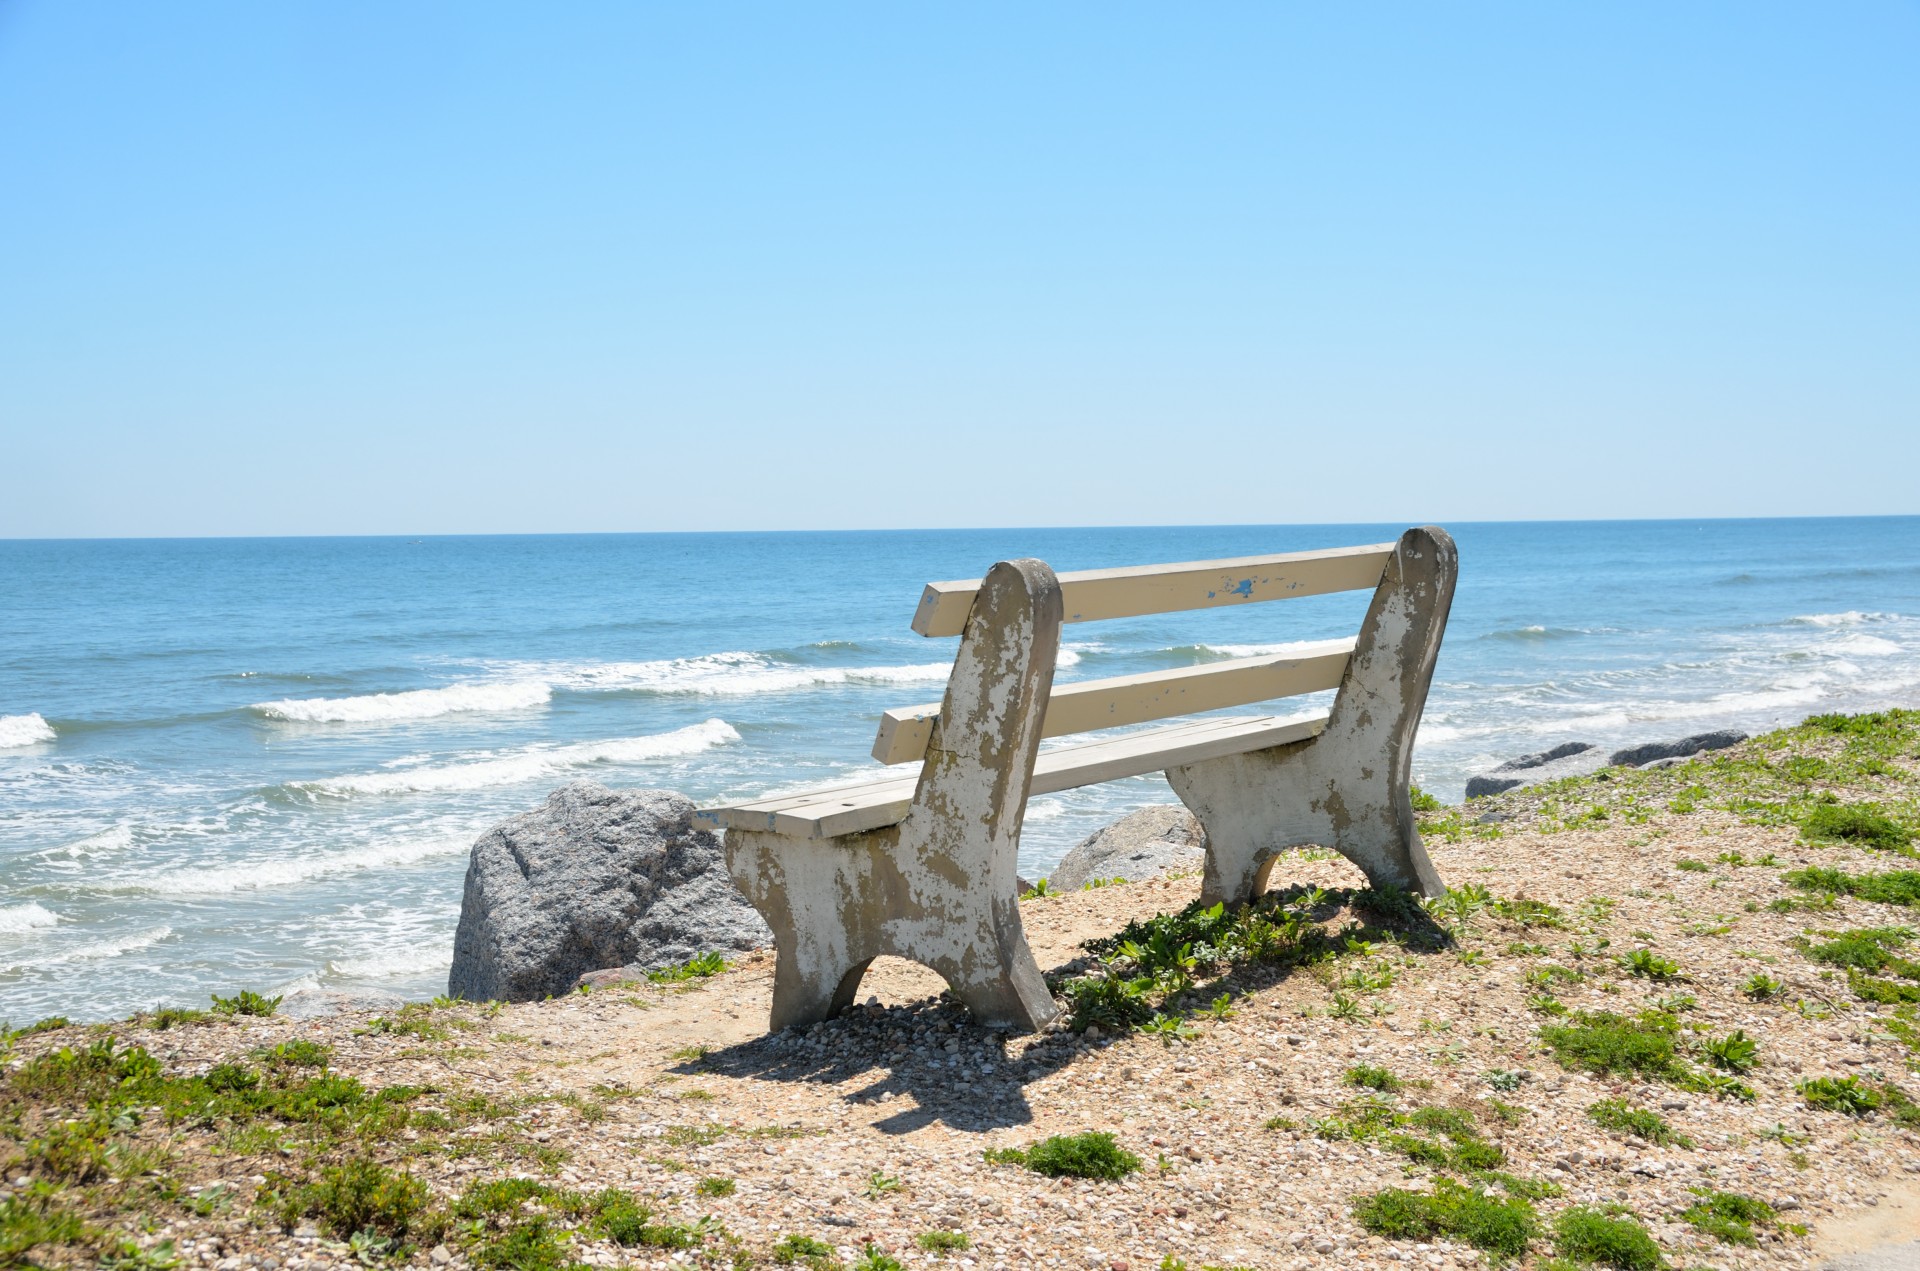 Bench seat over looking the ocean beach